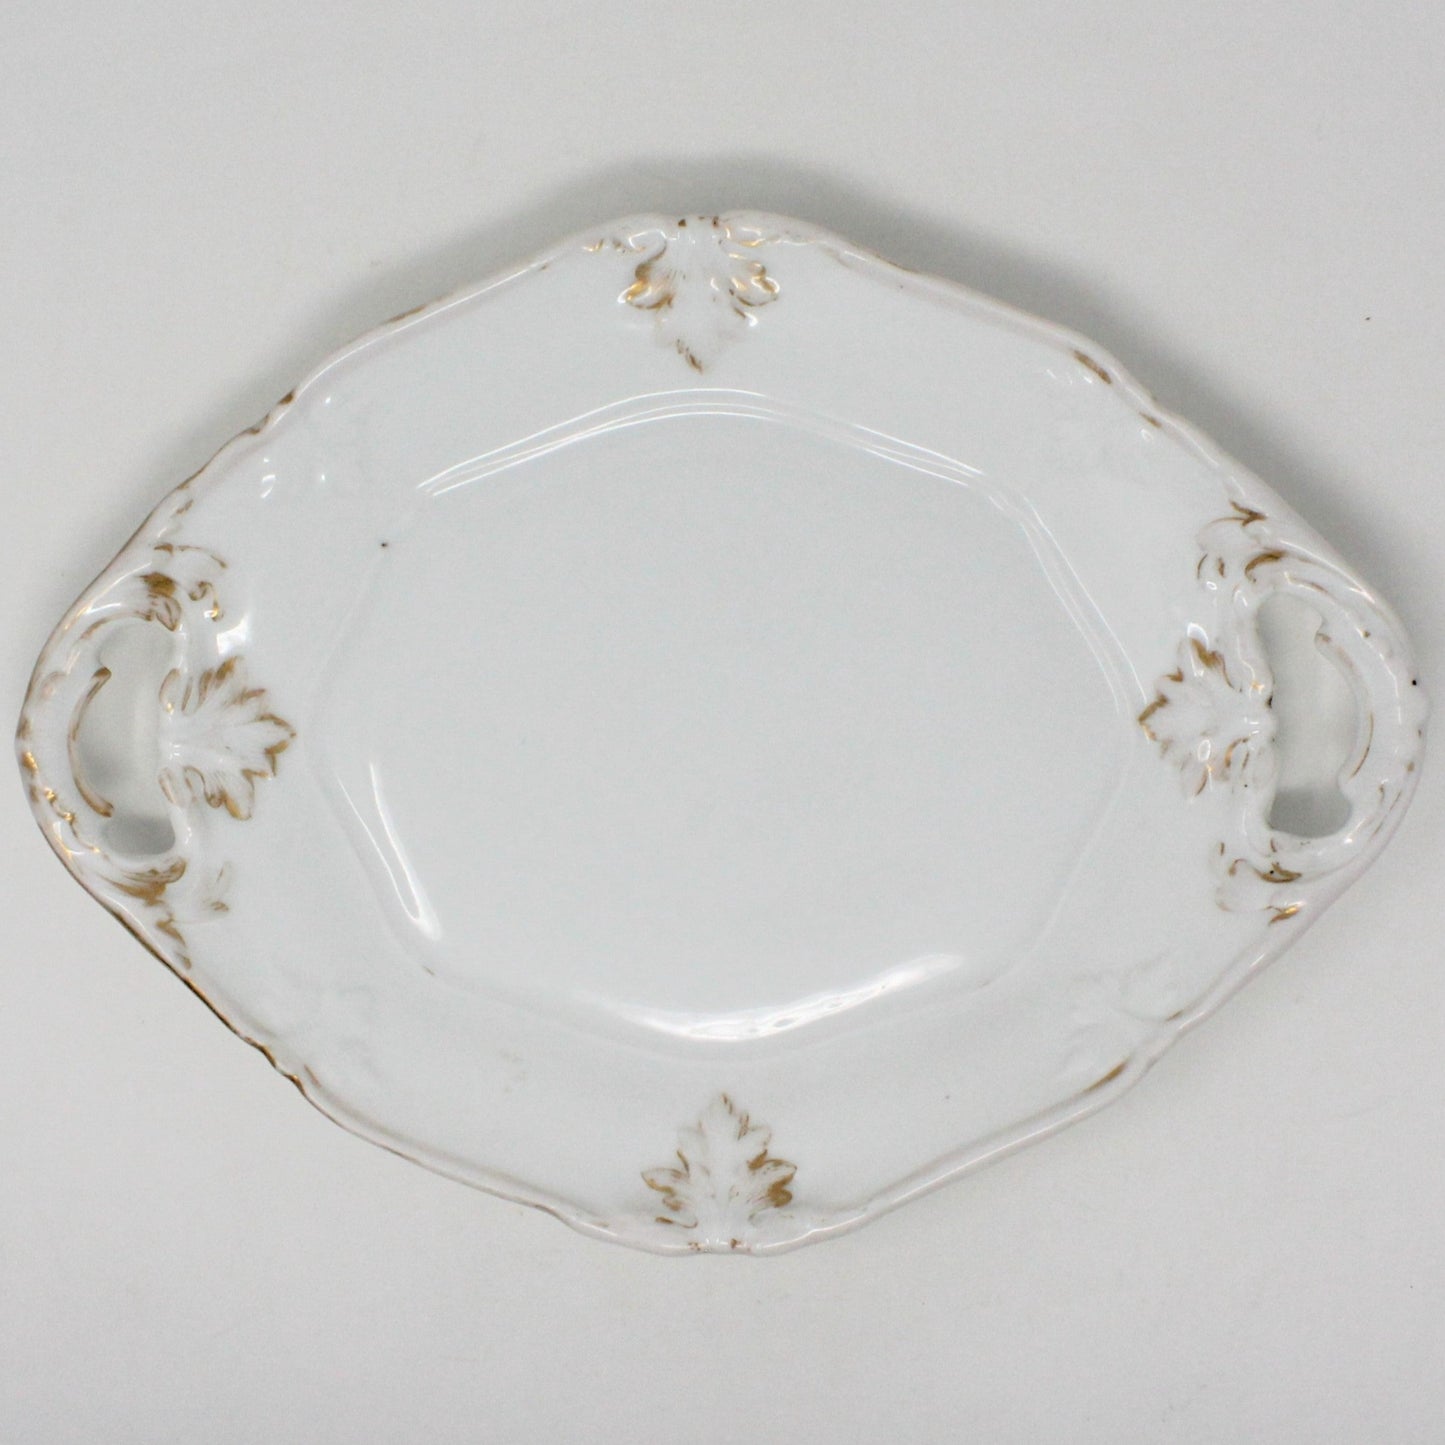 Serving Platter, White with Gold Leaves, Built in Handles, Vintage Ceramic 12"